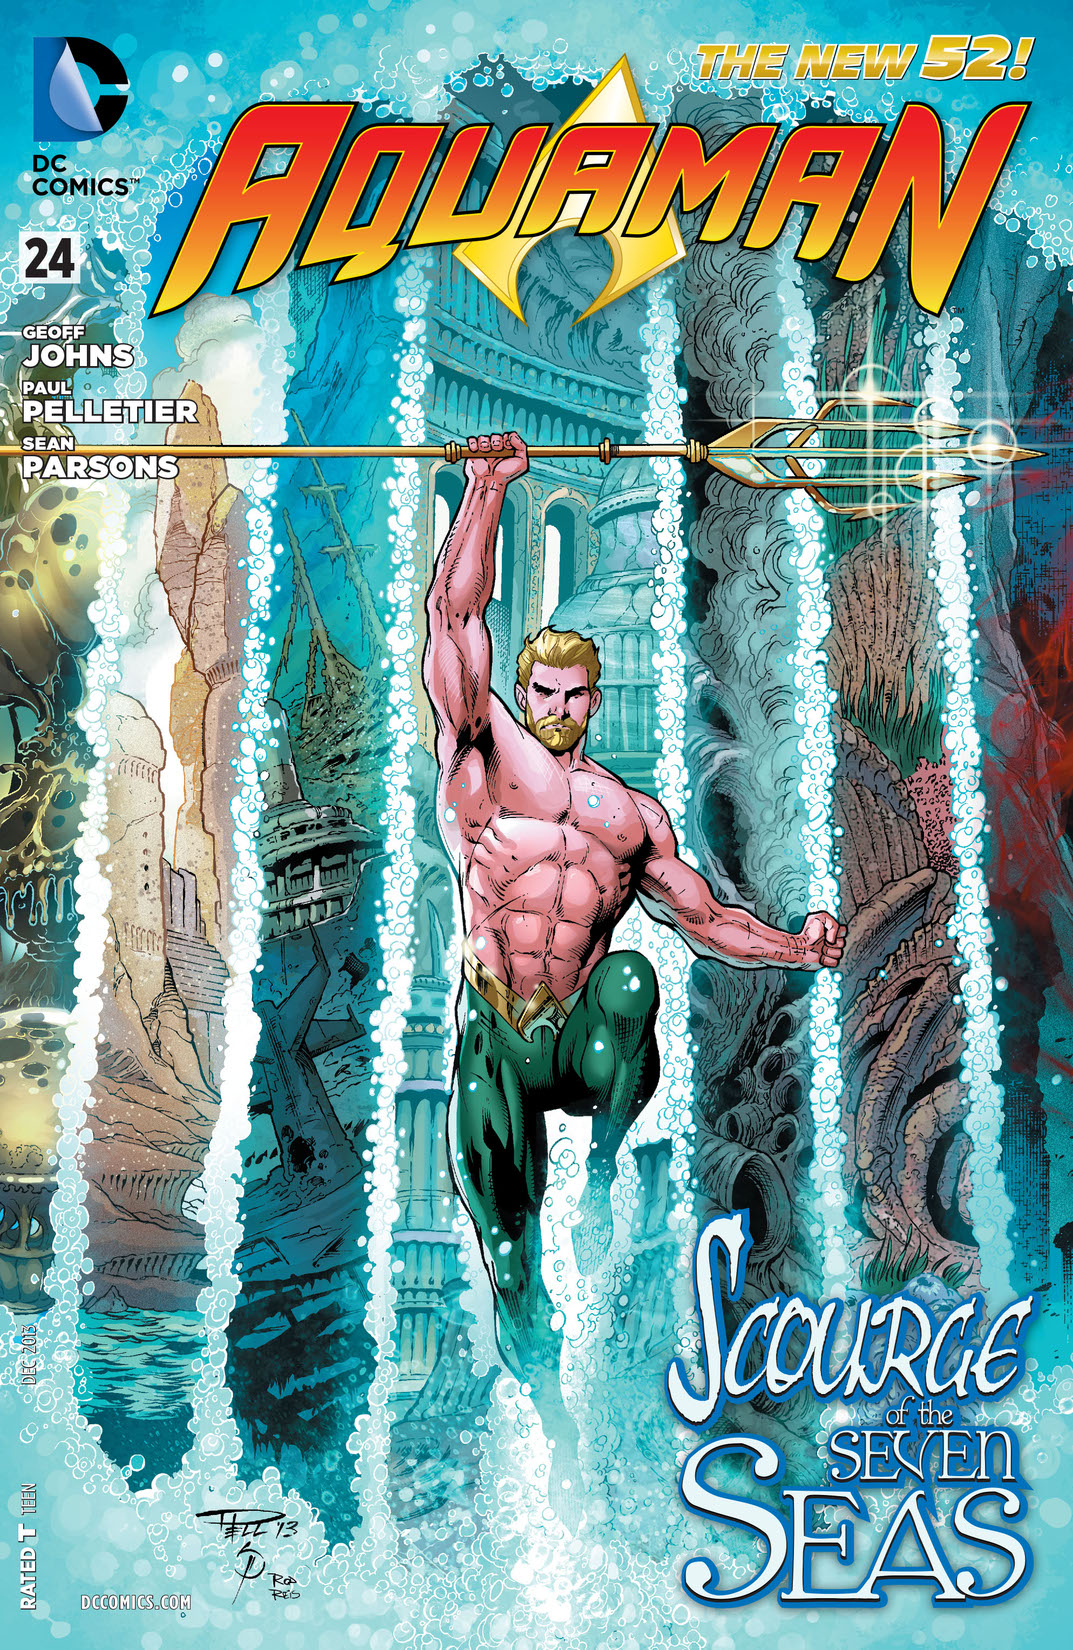 Aquaman (2011-) #24 preview images